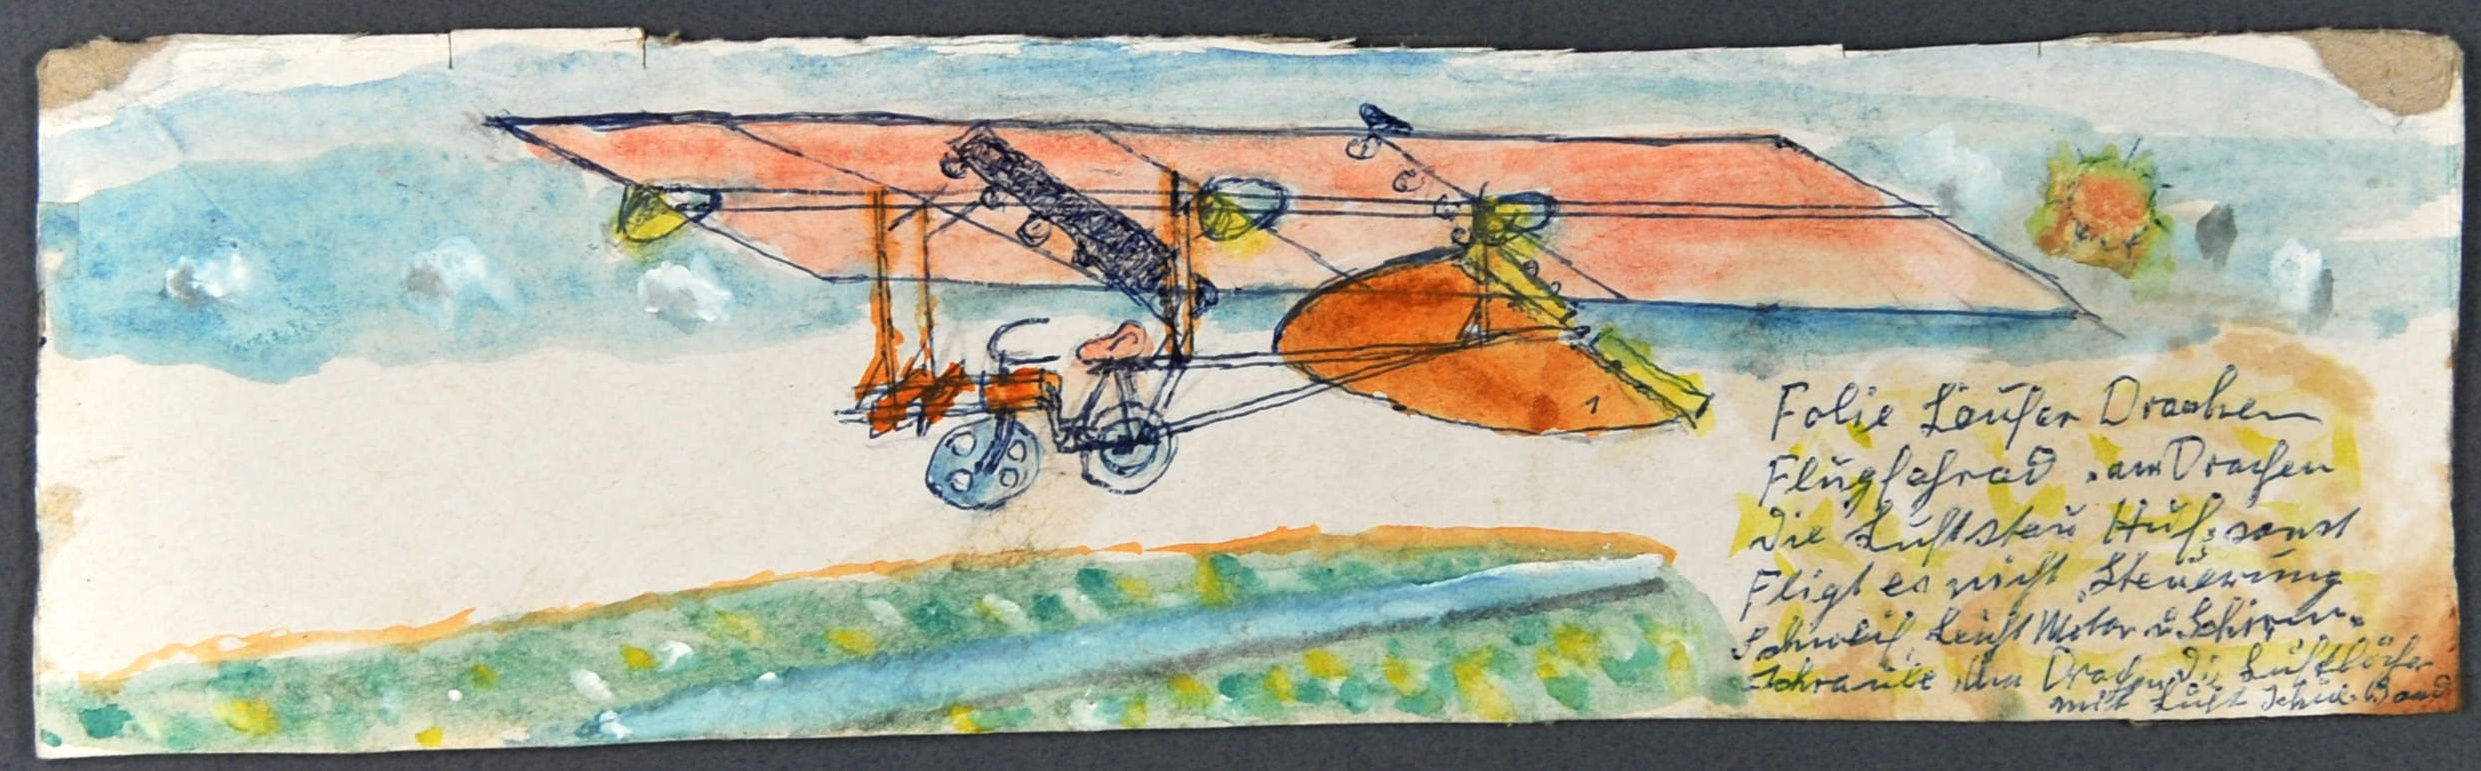 "Folie Läufer Drachen Flugfahrad" ; "Schirme Flugzeug" (Gustav Mesmer Stiftung CC BY-NC-SA)